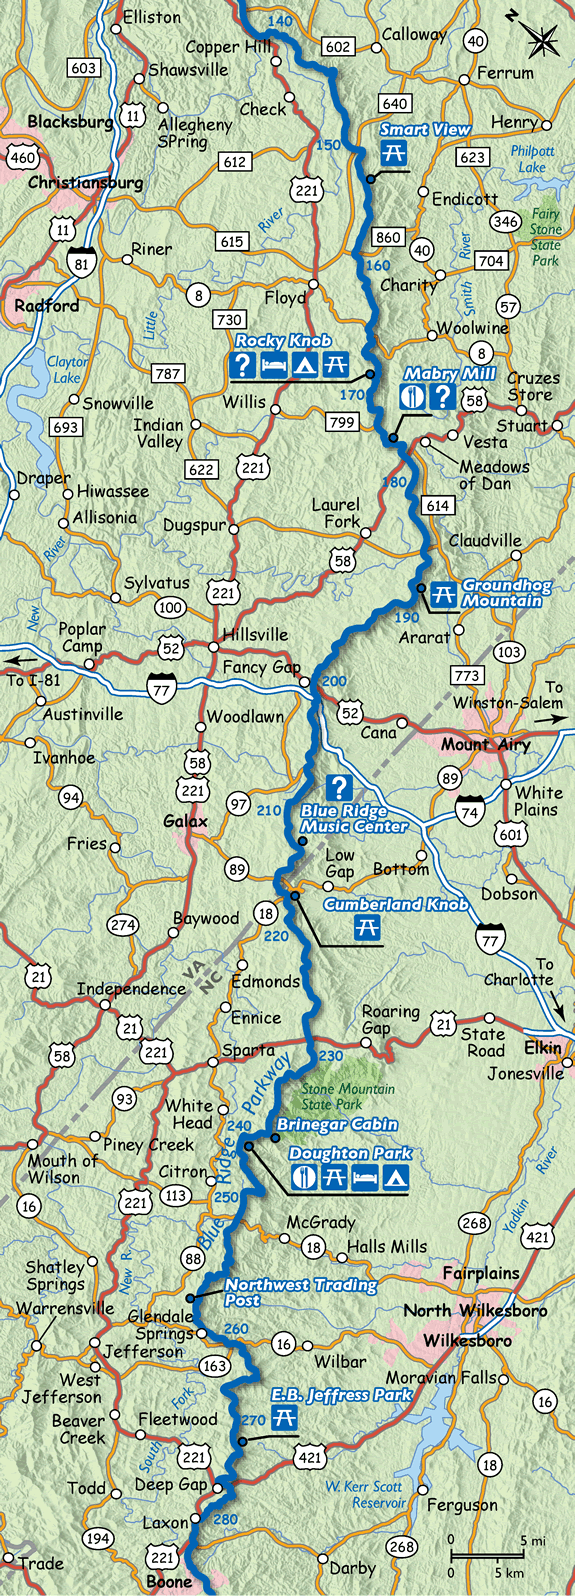 Map of the Blue Ridge Parkway Virginia - North Carolina State Line